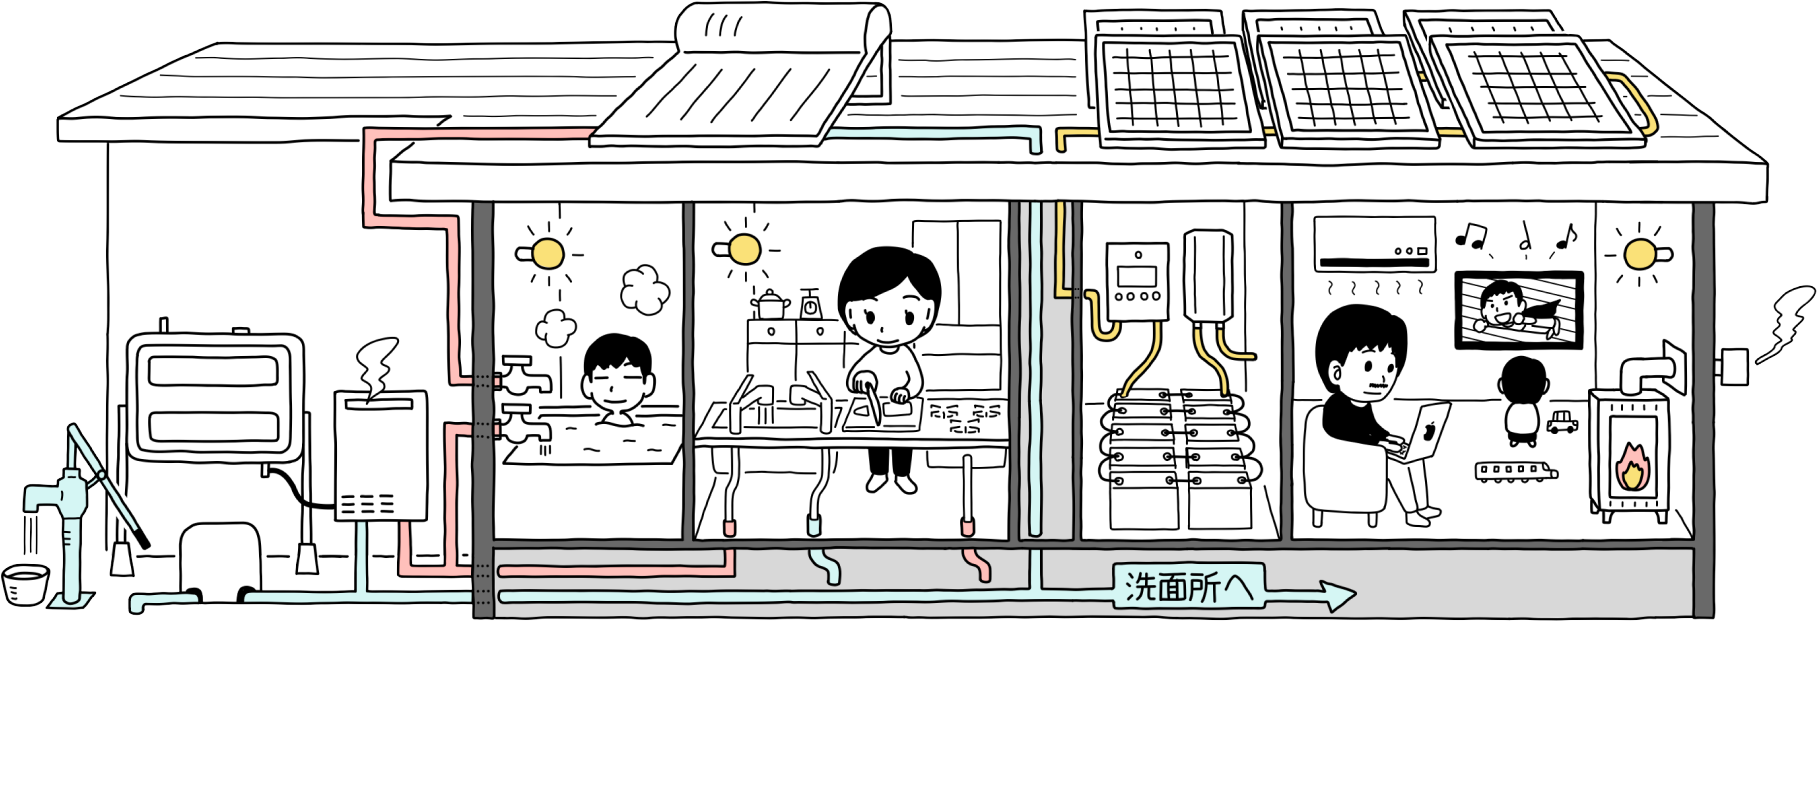 OFF GRID HOUSE / Energy Renovation